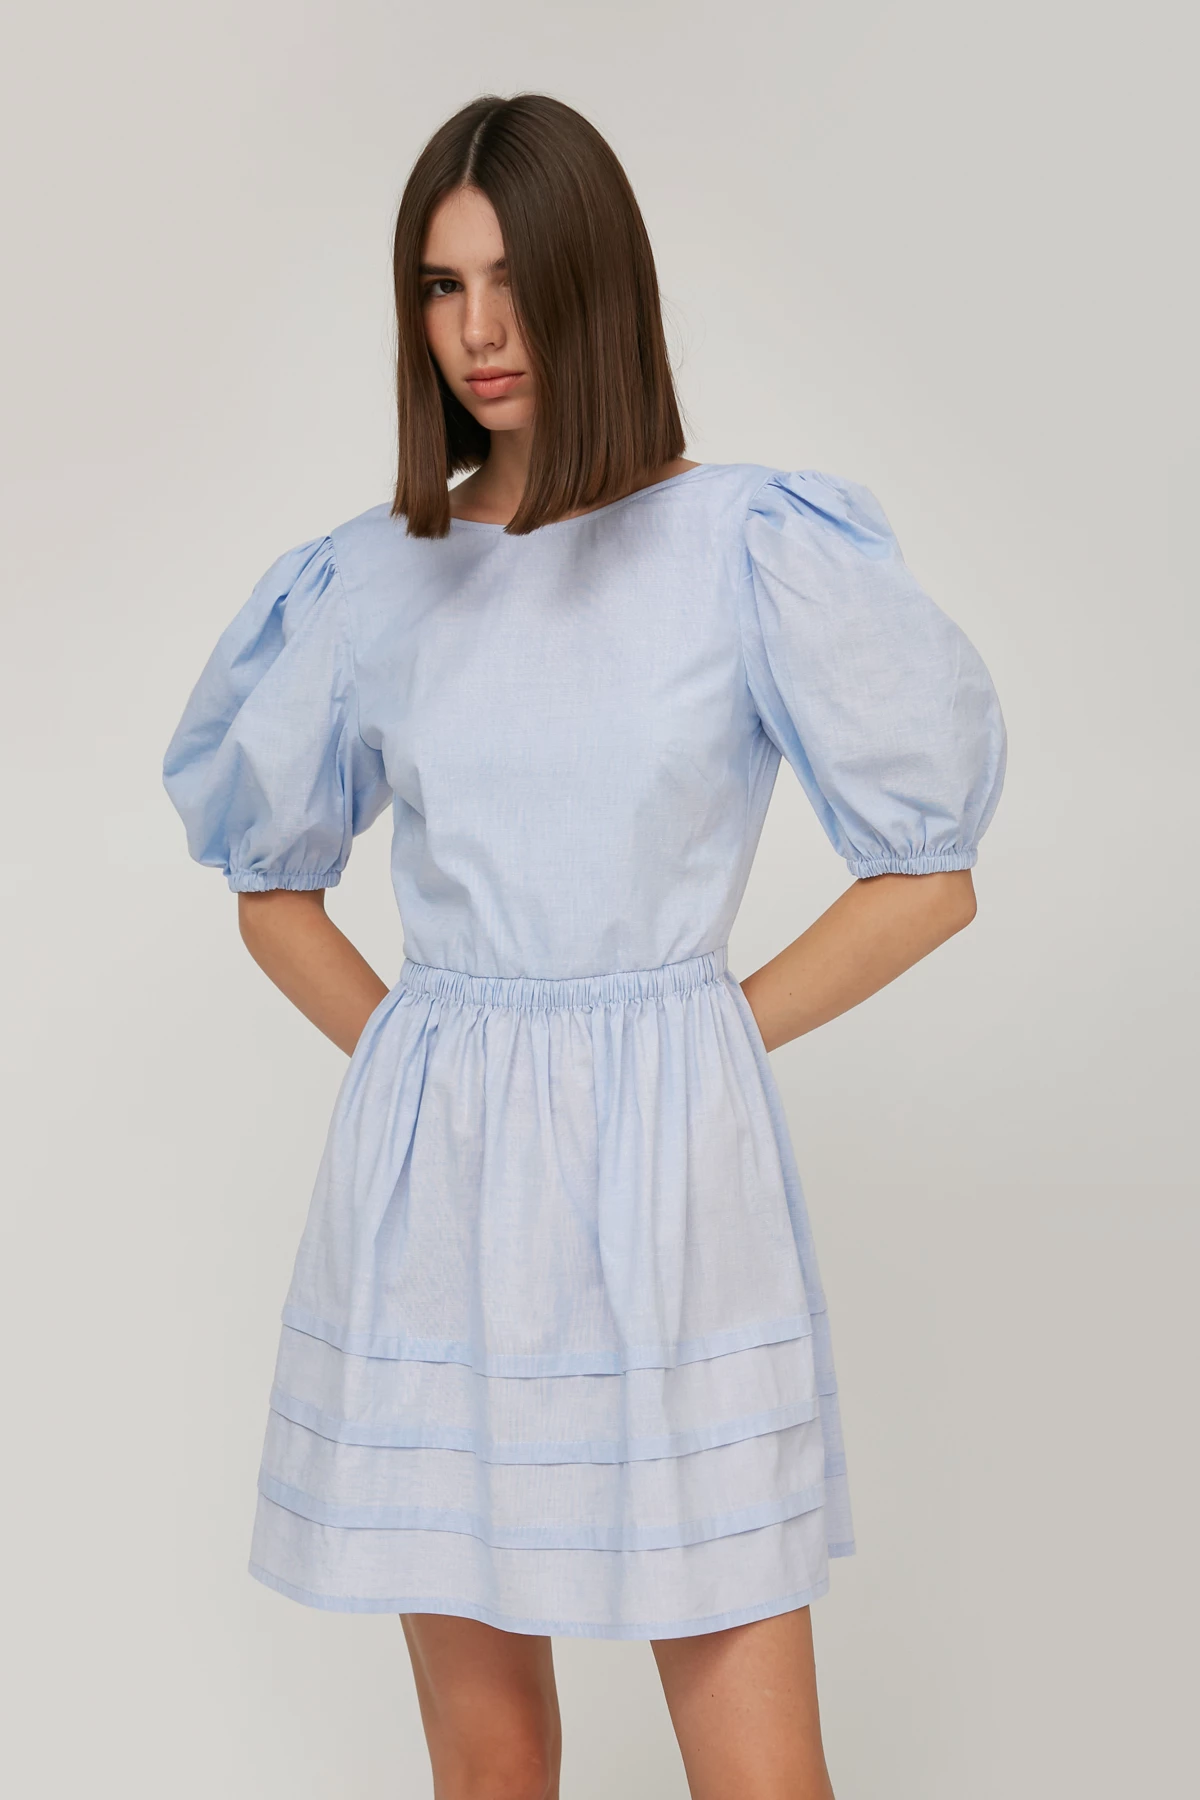 Blue short shirt fabric dress, photo 2